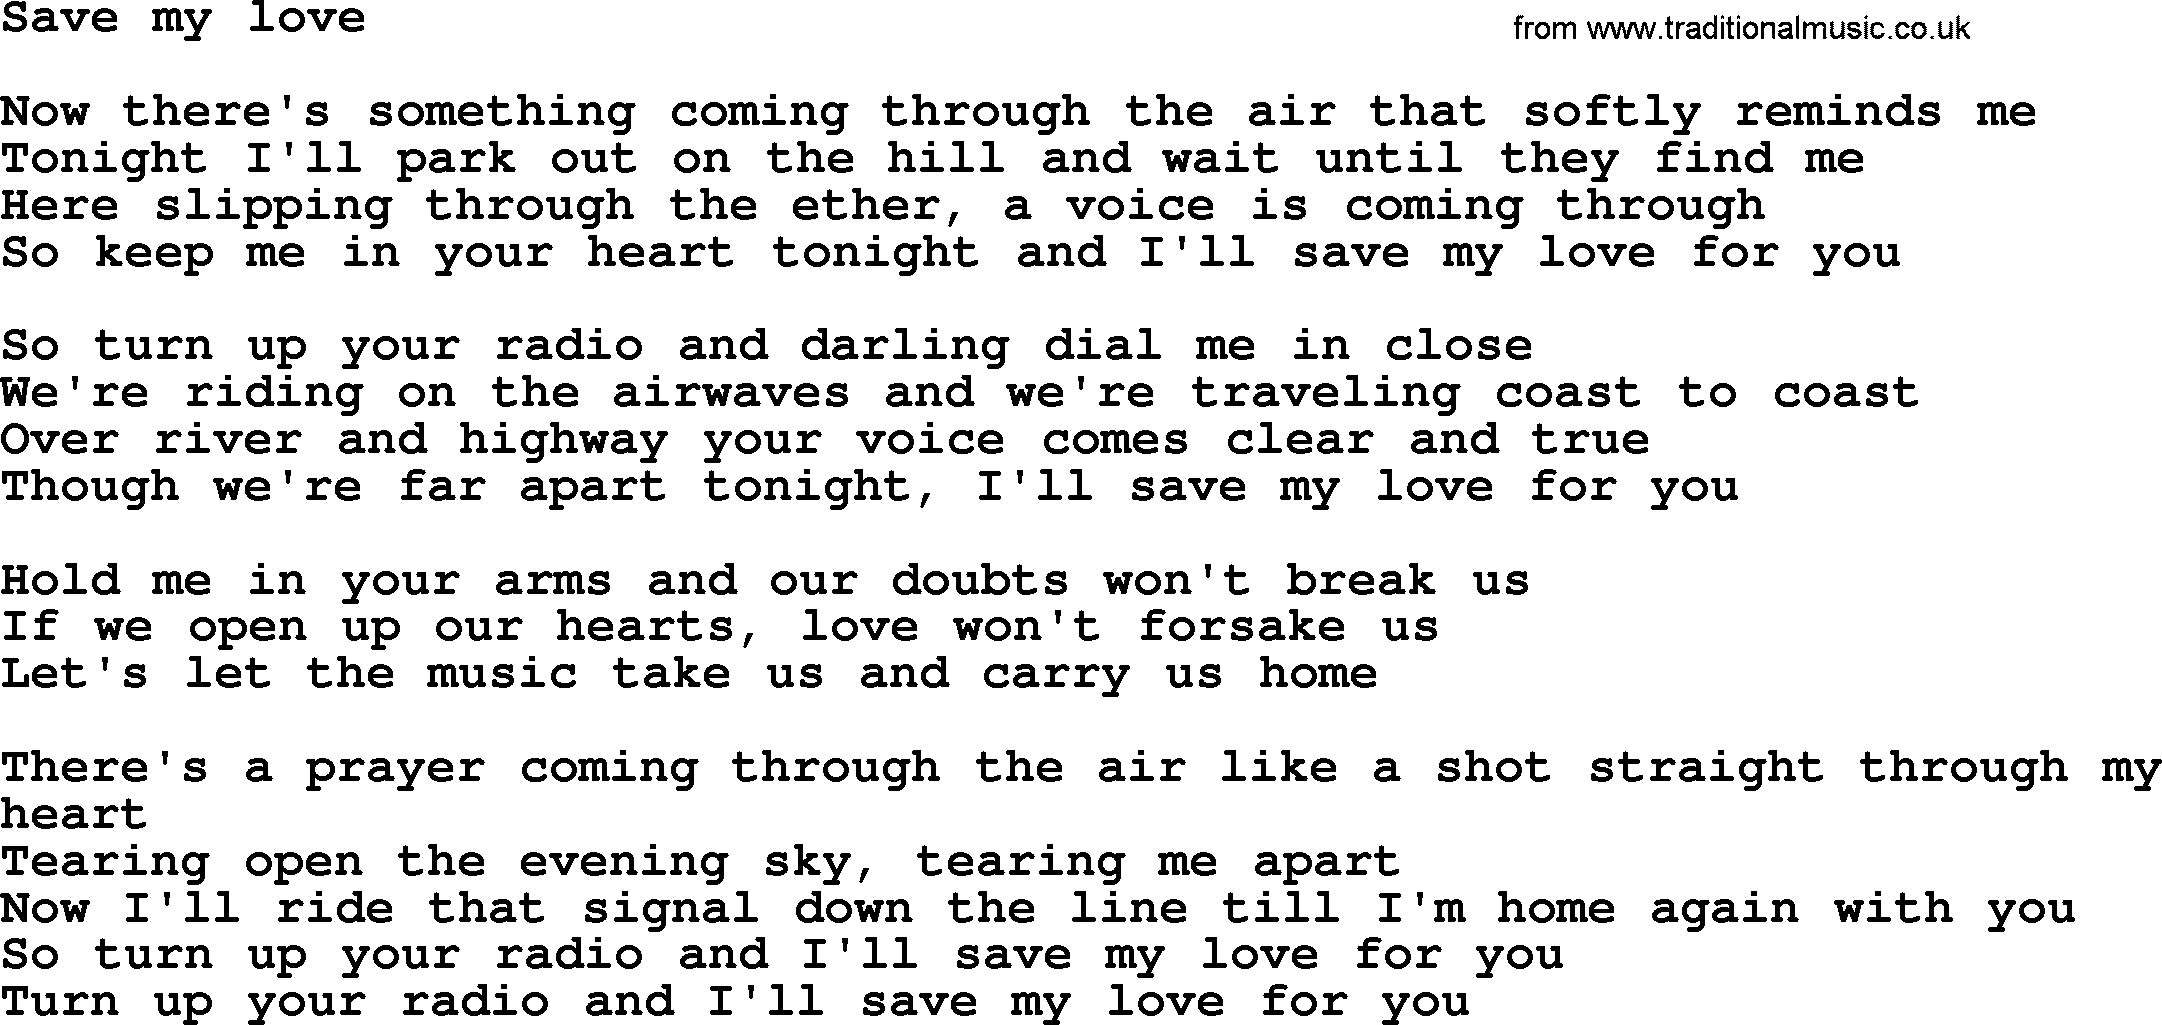 Bruce Springsteen song: Save My Love lyrics